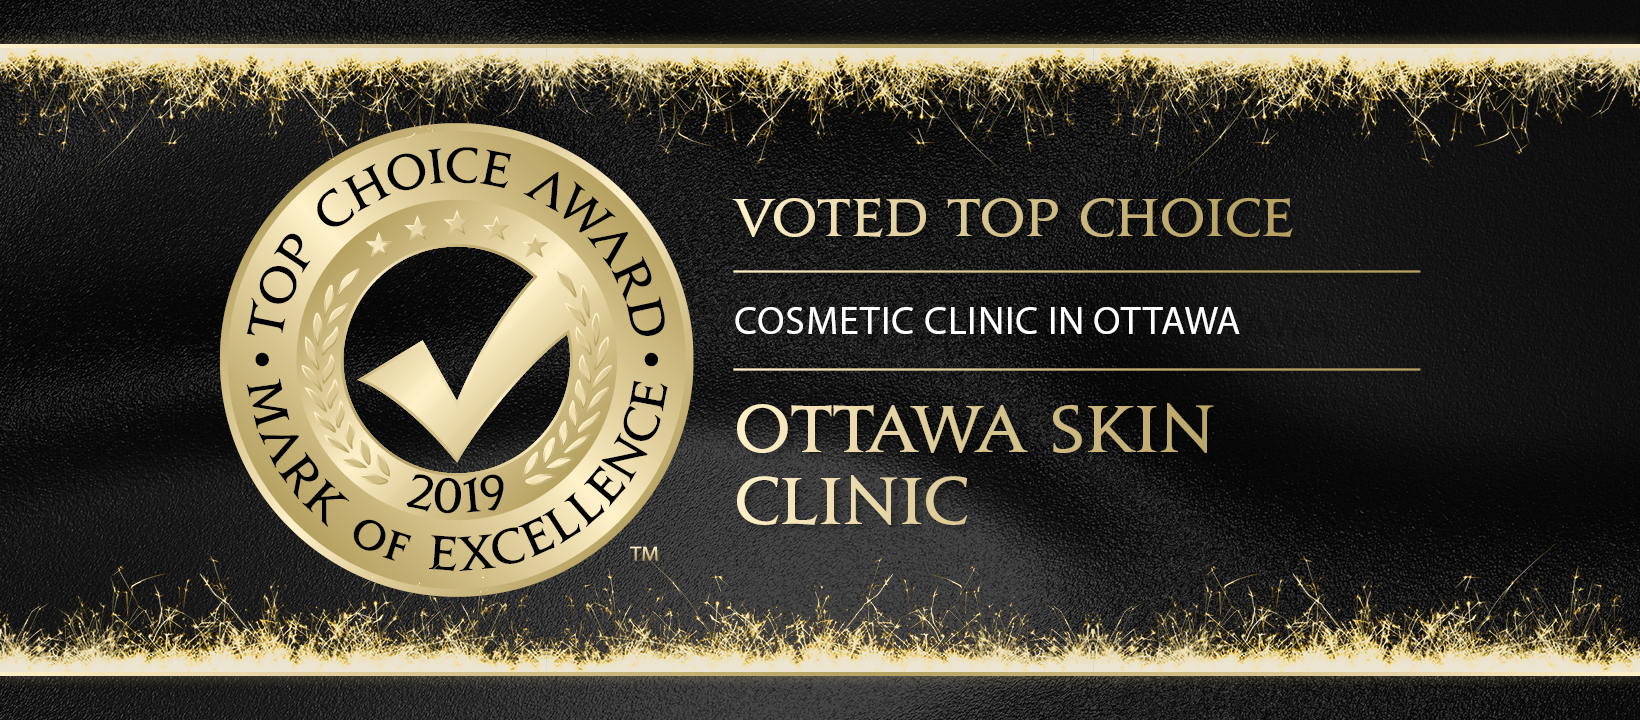 Project Skin MD Ottawa, Rebranding of The Ottawa Skin Clinic